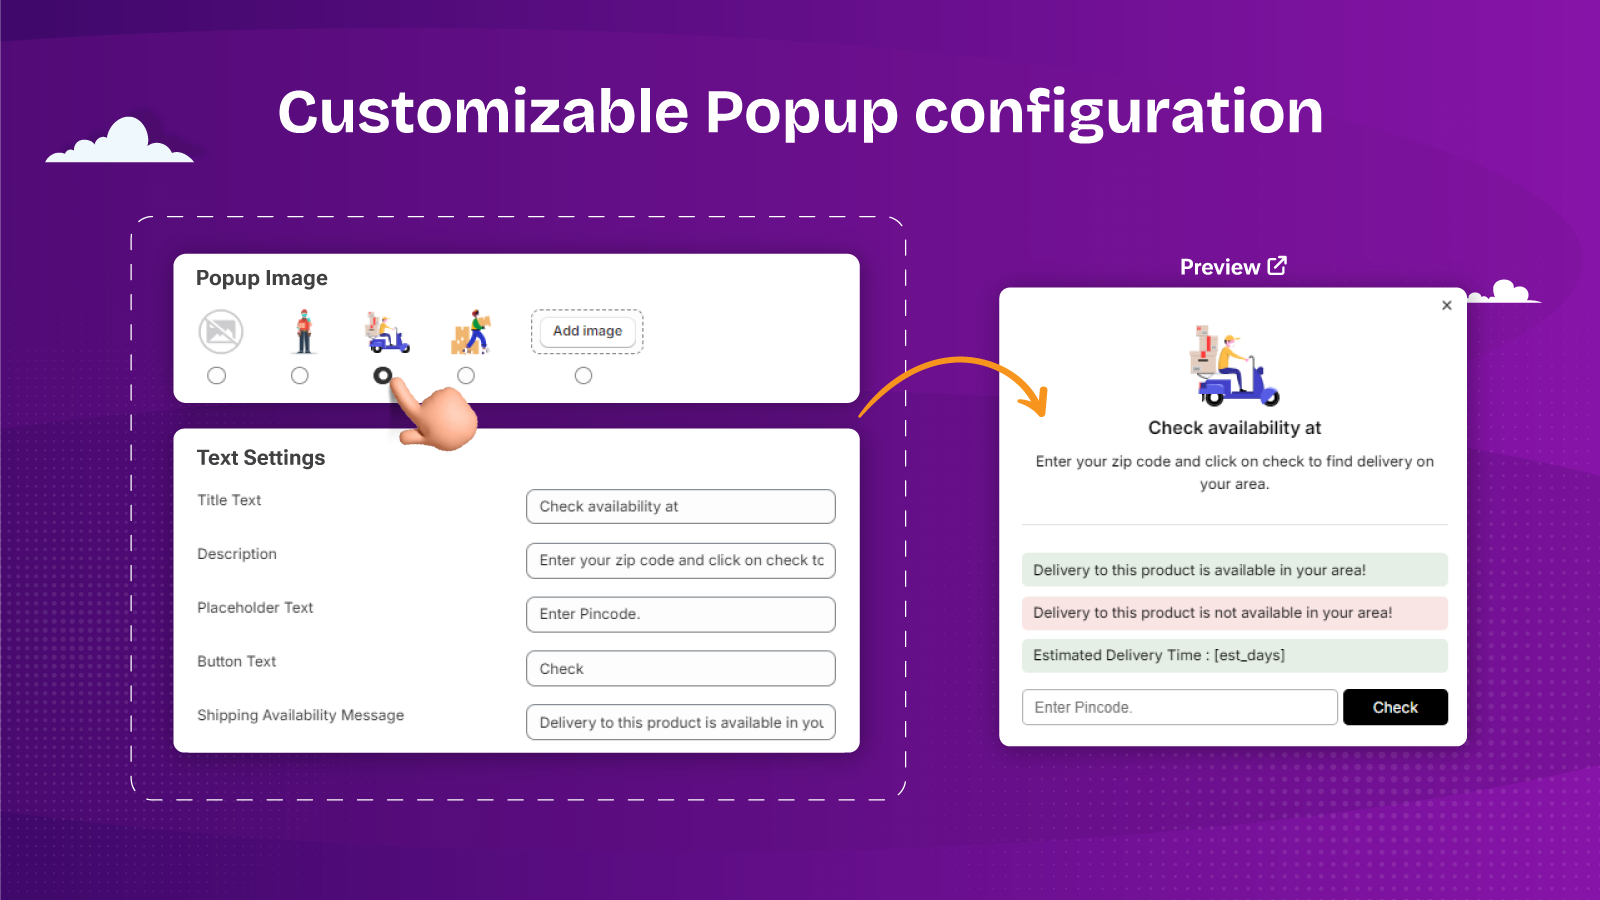 Customizable Popup Configurations